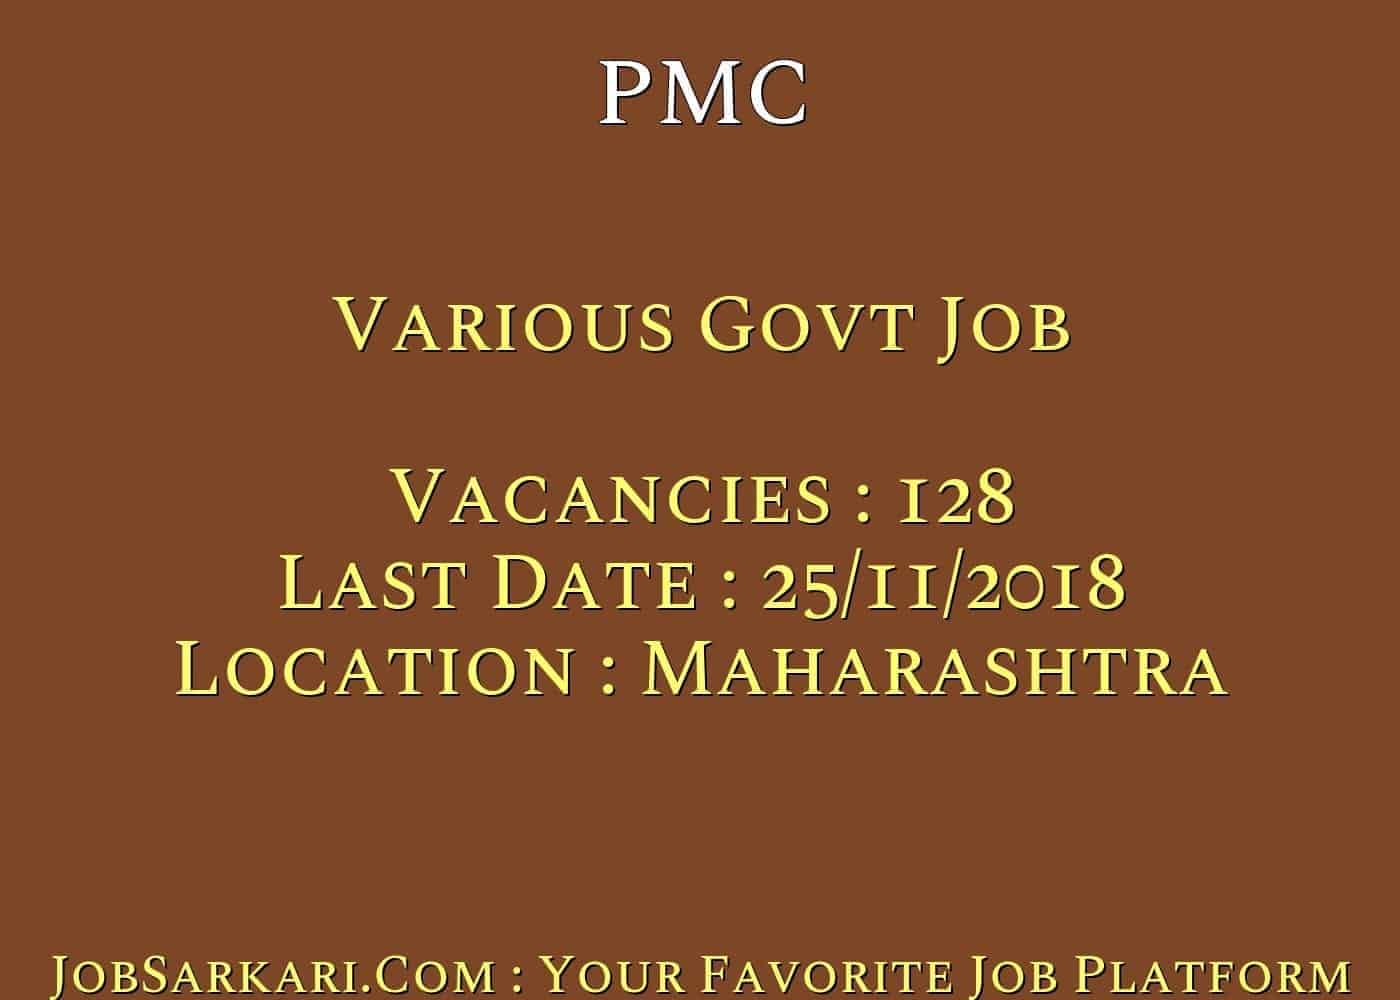 PMC Recruitment 2018 for Various Govt Job